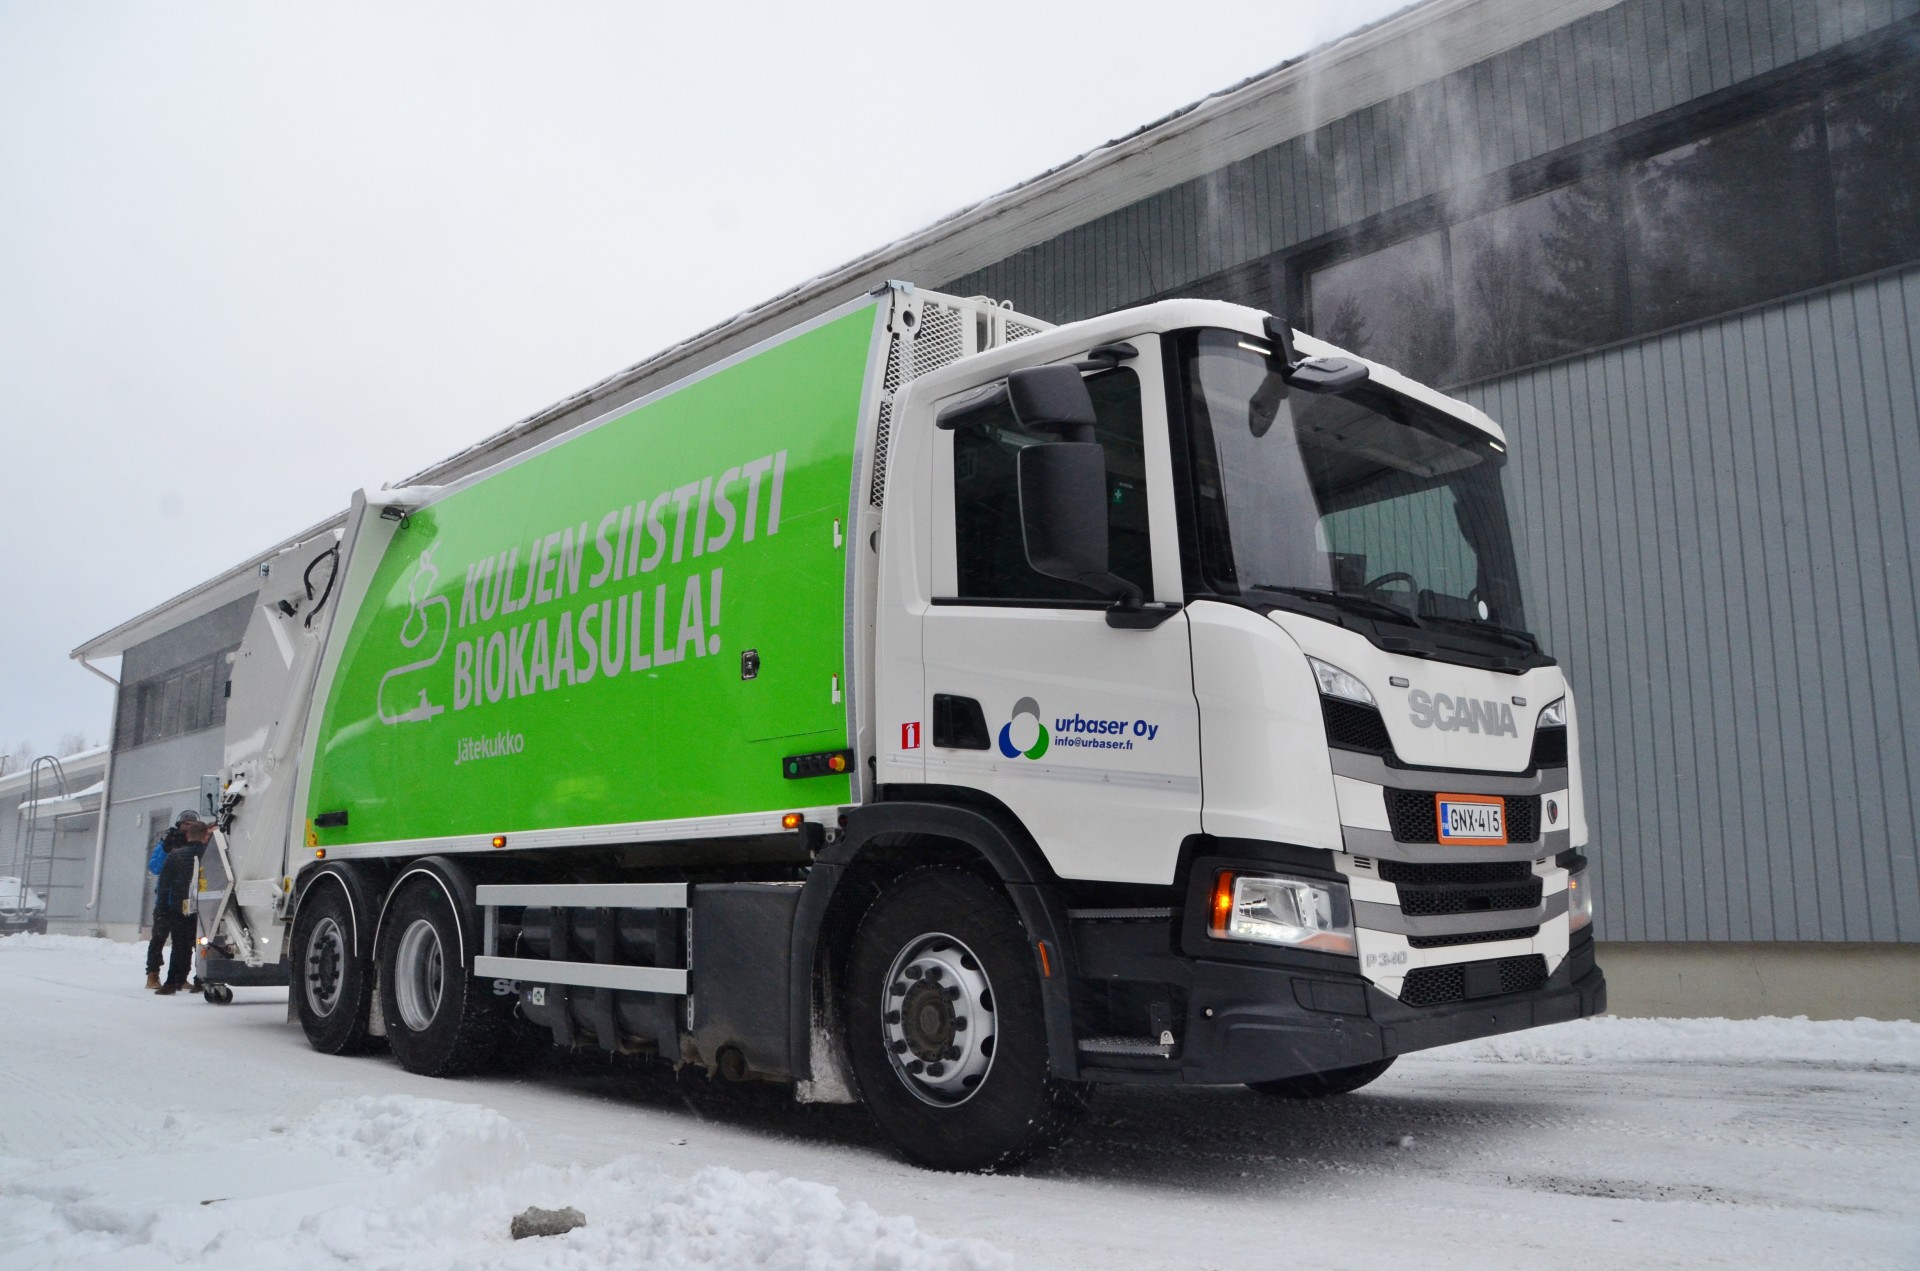 Scania Biogas Trucks